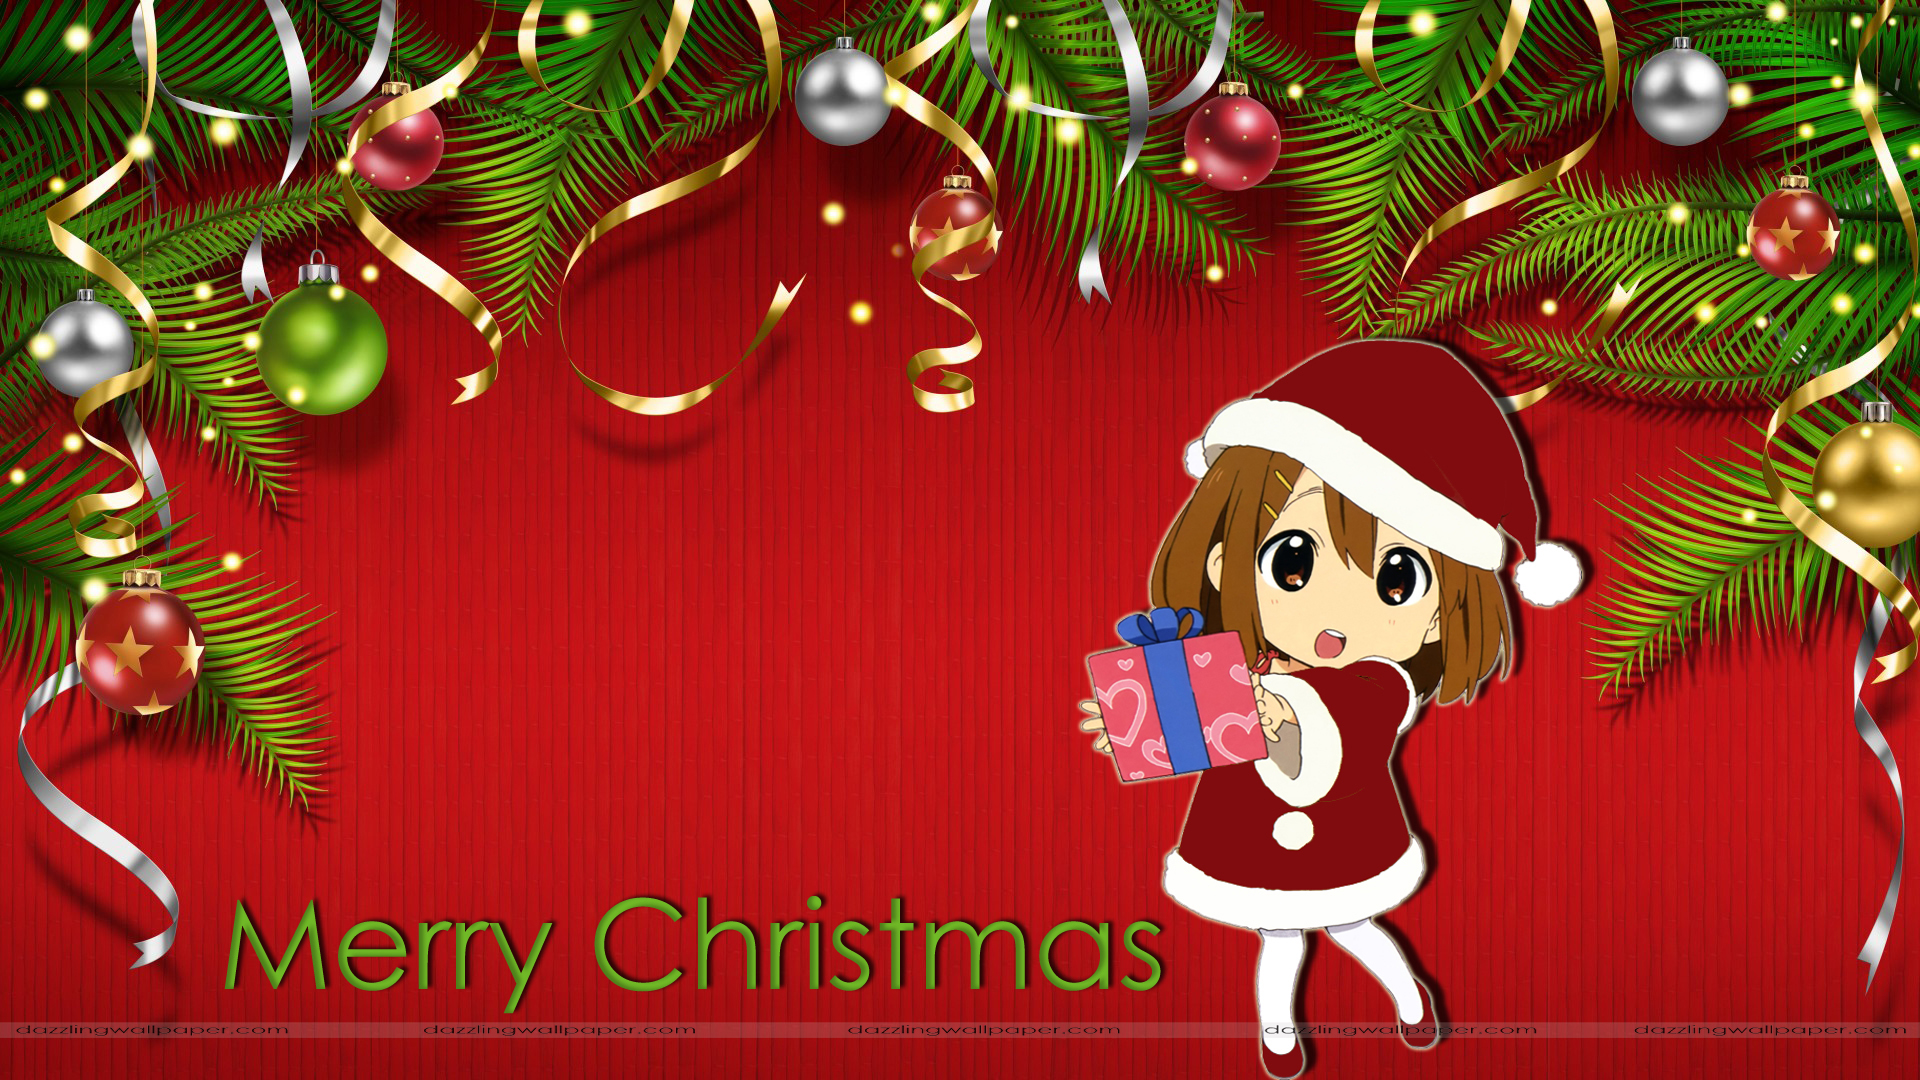 귀여운 메리 크리스마스 벽지,크리스마스,크리스마스 이브,나무,크리스마스 트리,크리스마스 장식